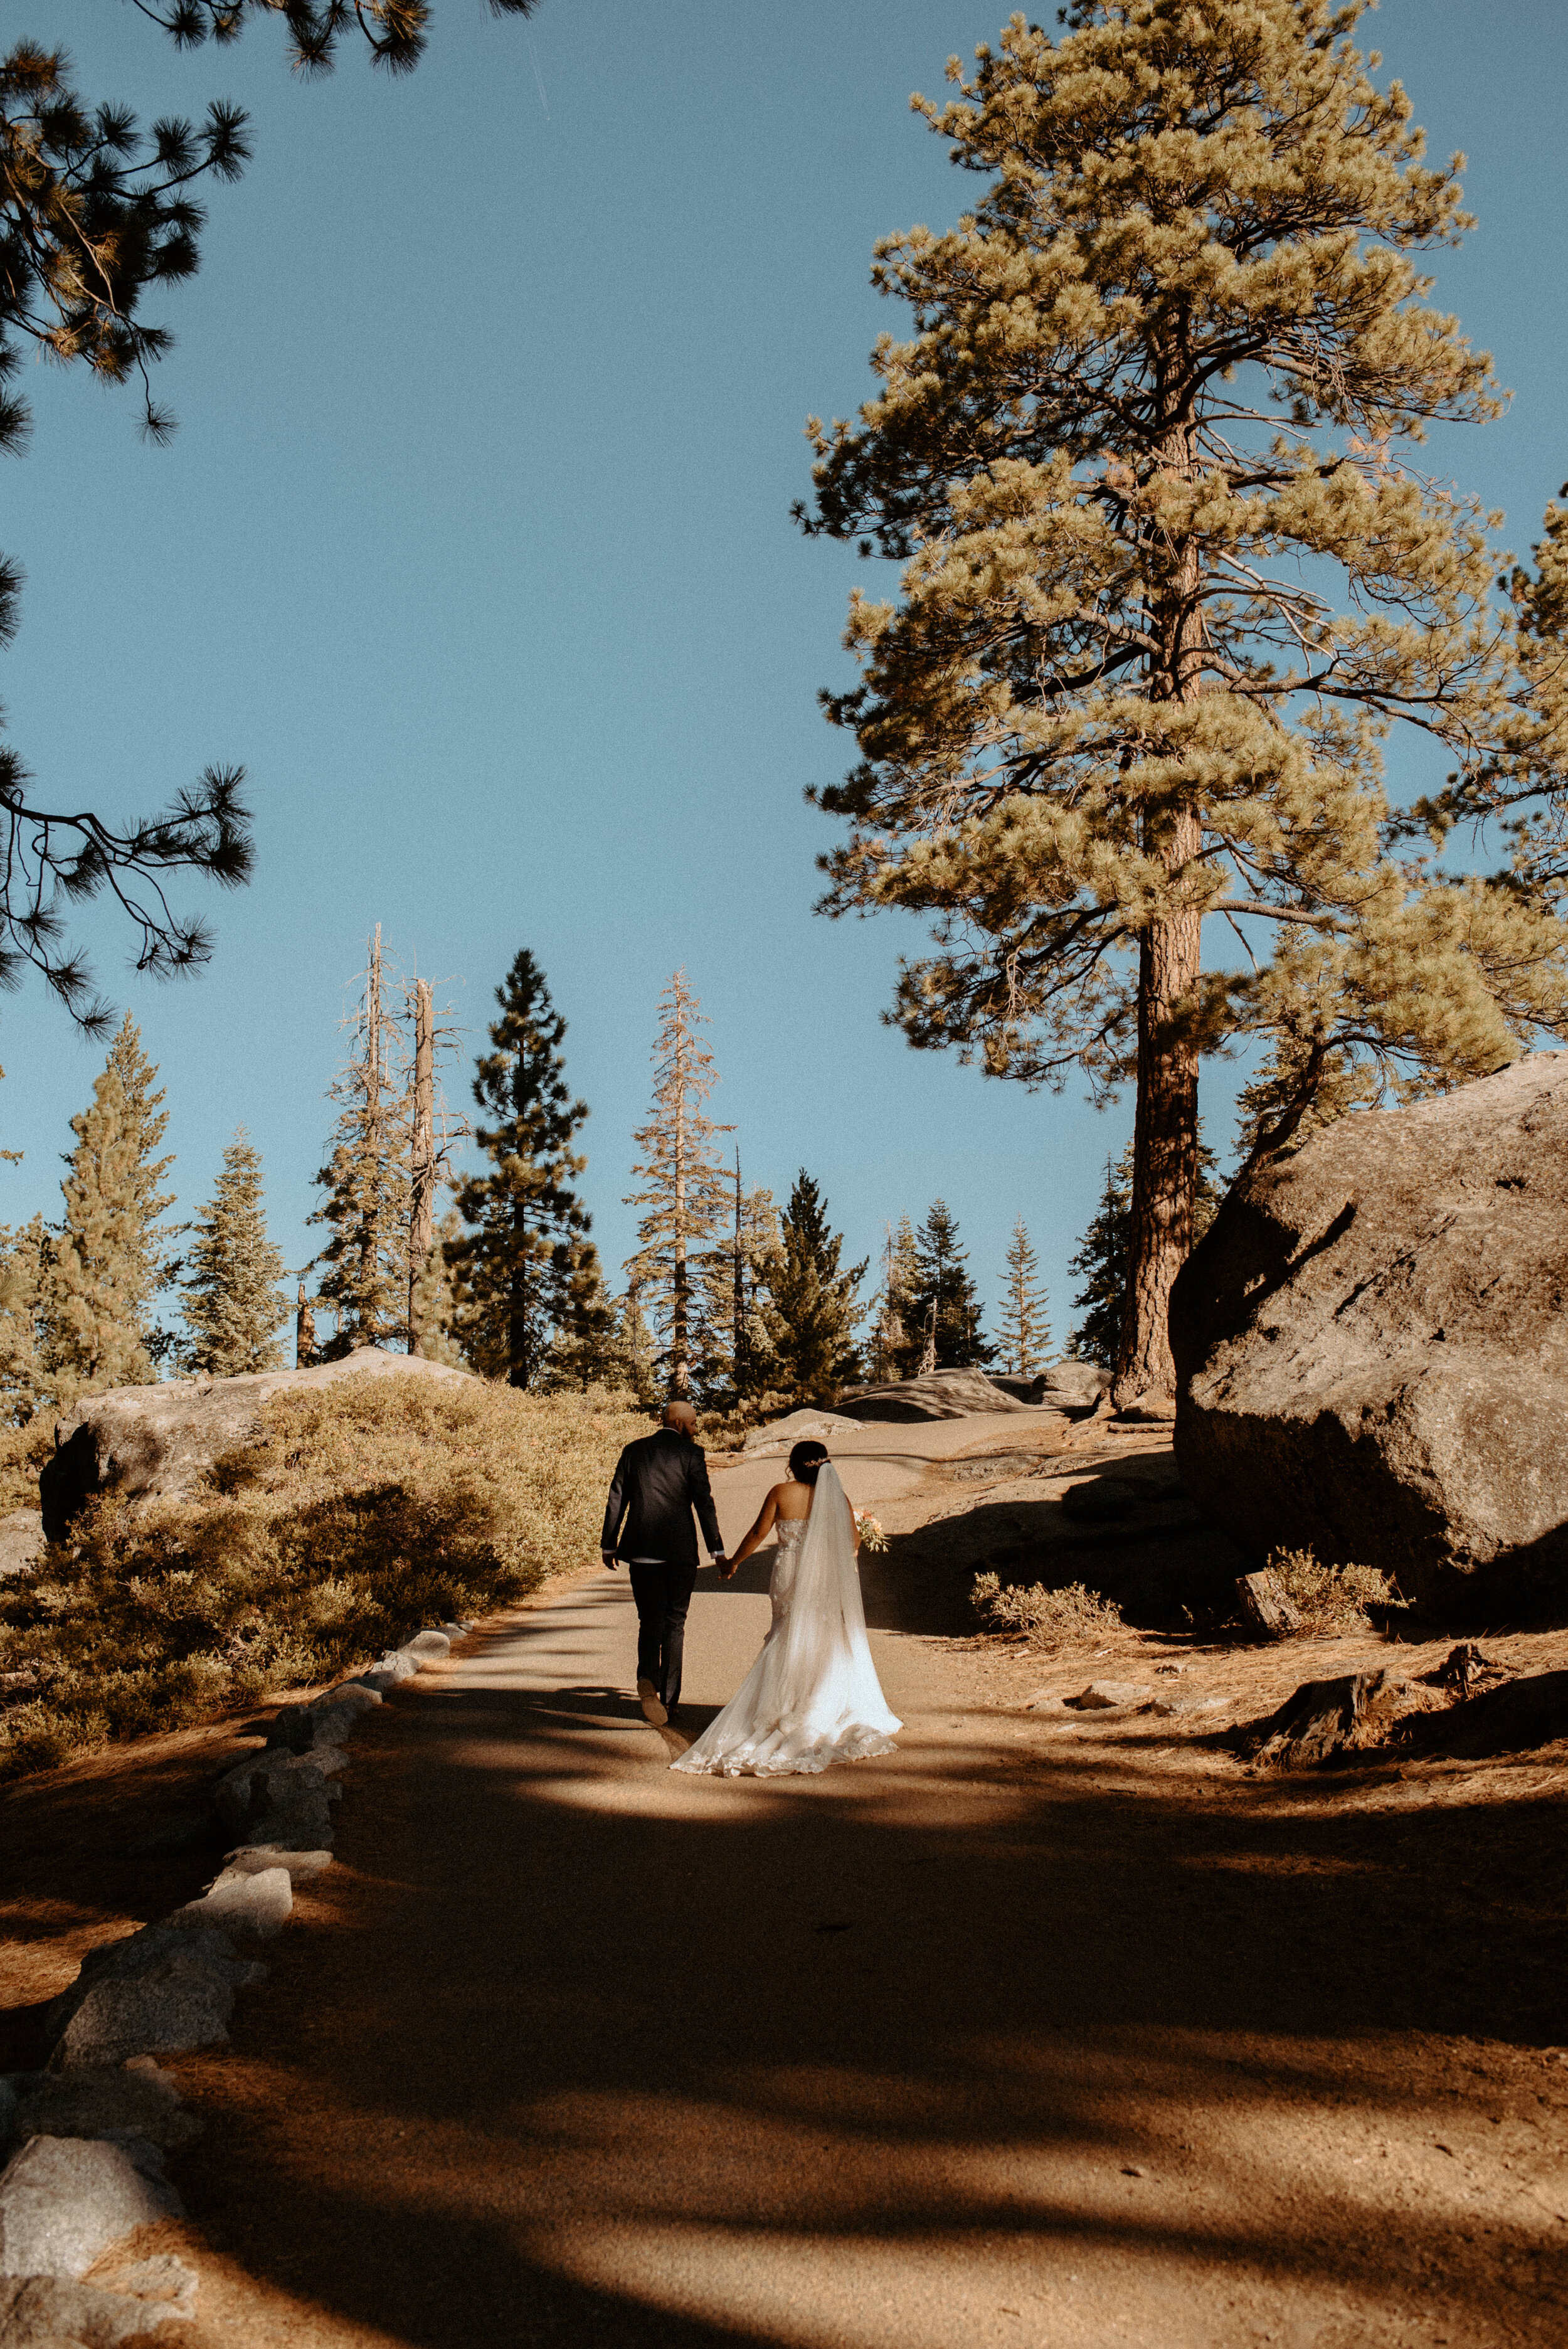 Glacier Point Elopement | Yosemite National Park Elopement and Wedding Photographer | Sunrise adventure elopement | California Elopement Photographer